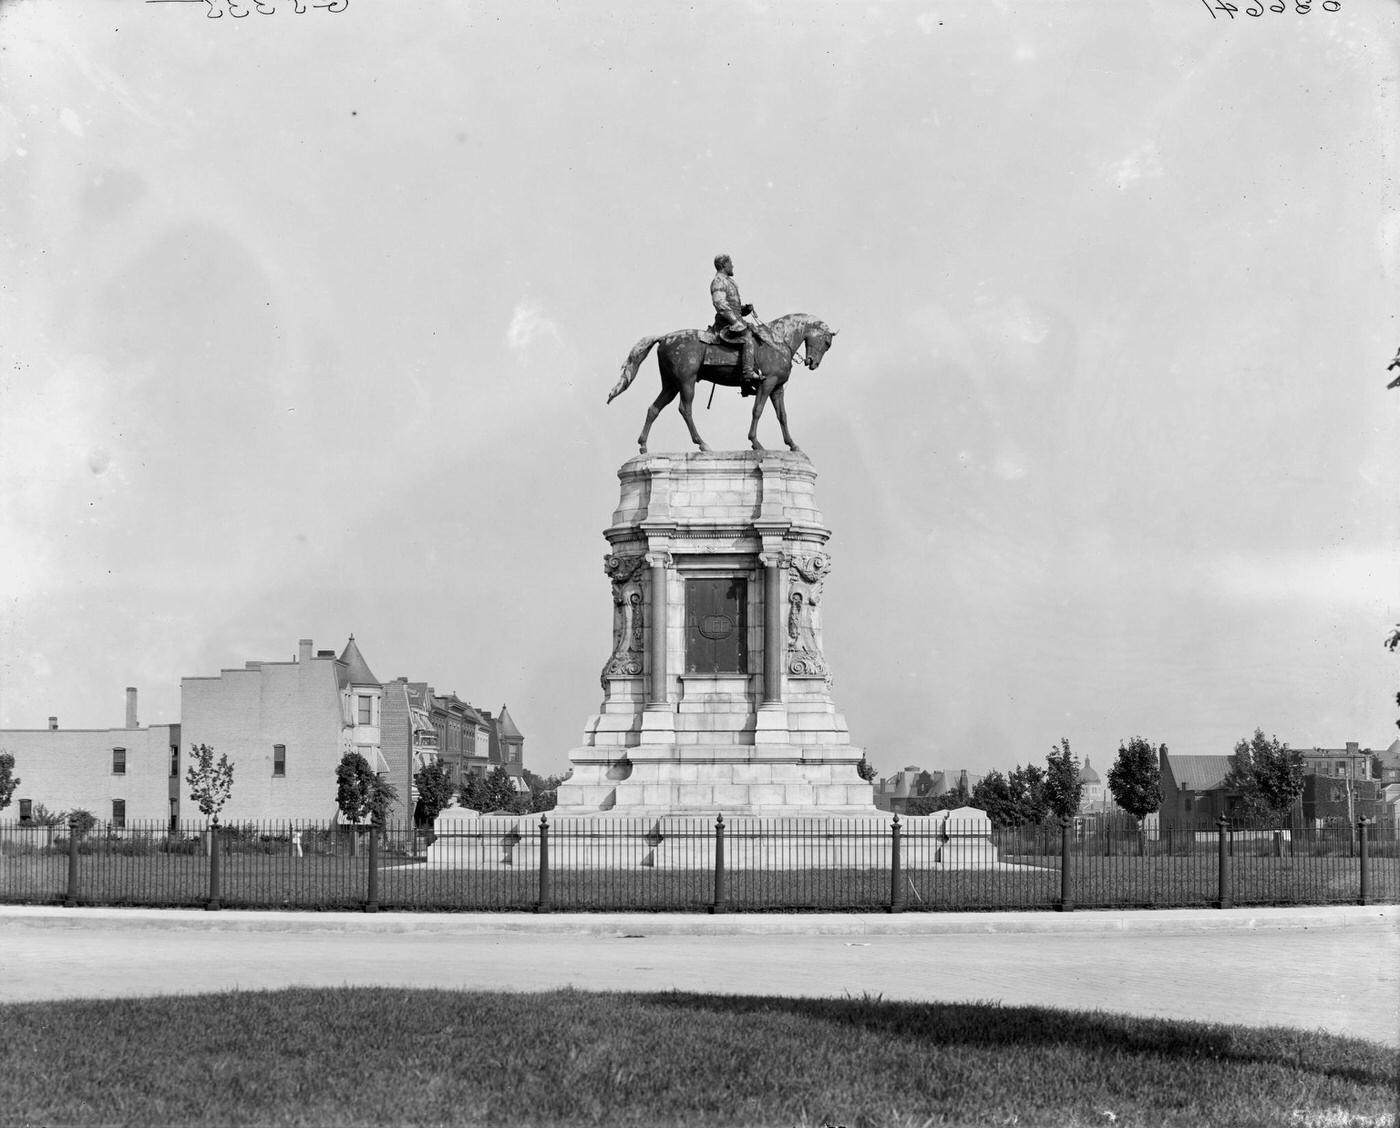 View of an equestrian statue of General Robert E Lee (sculpted by Antonin Mercie, from an illustration by Adalbert Volck), Richmond, Virginia, 1905.